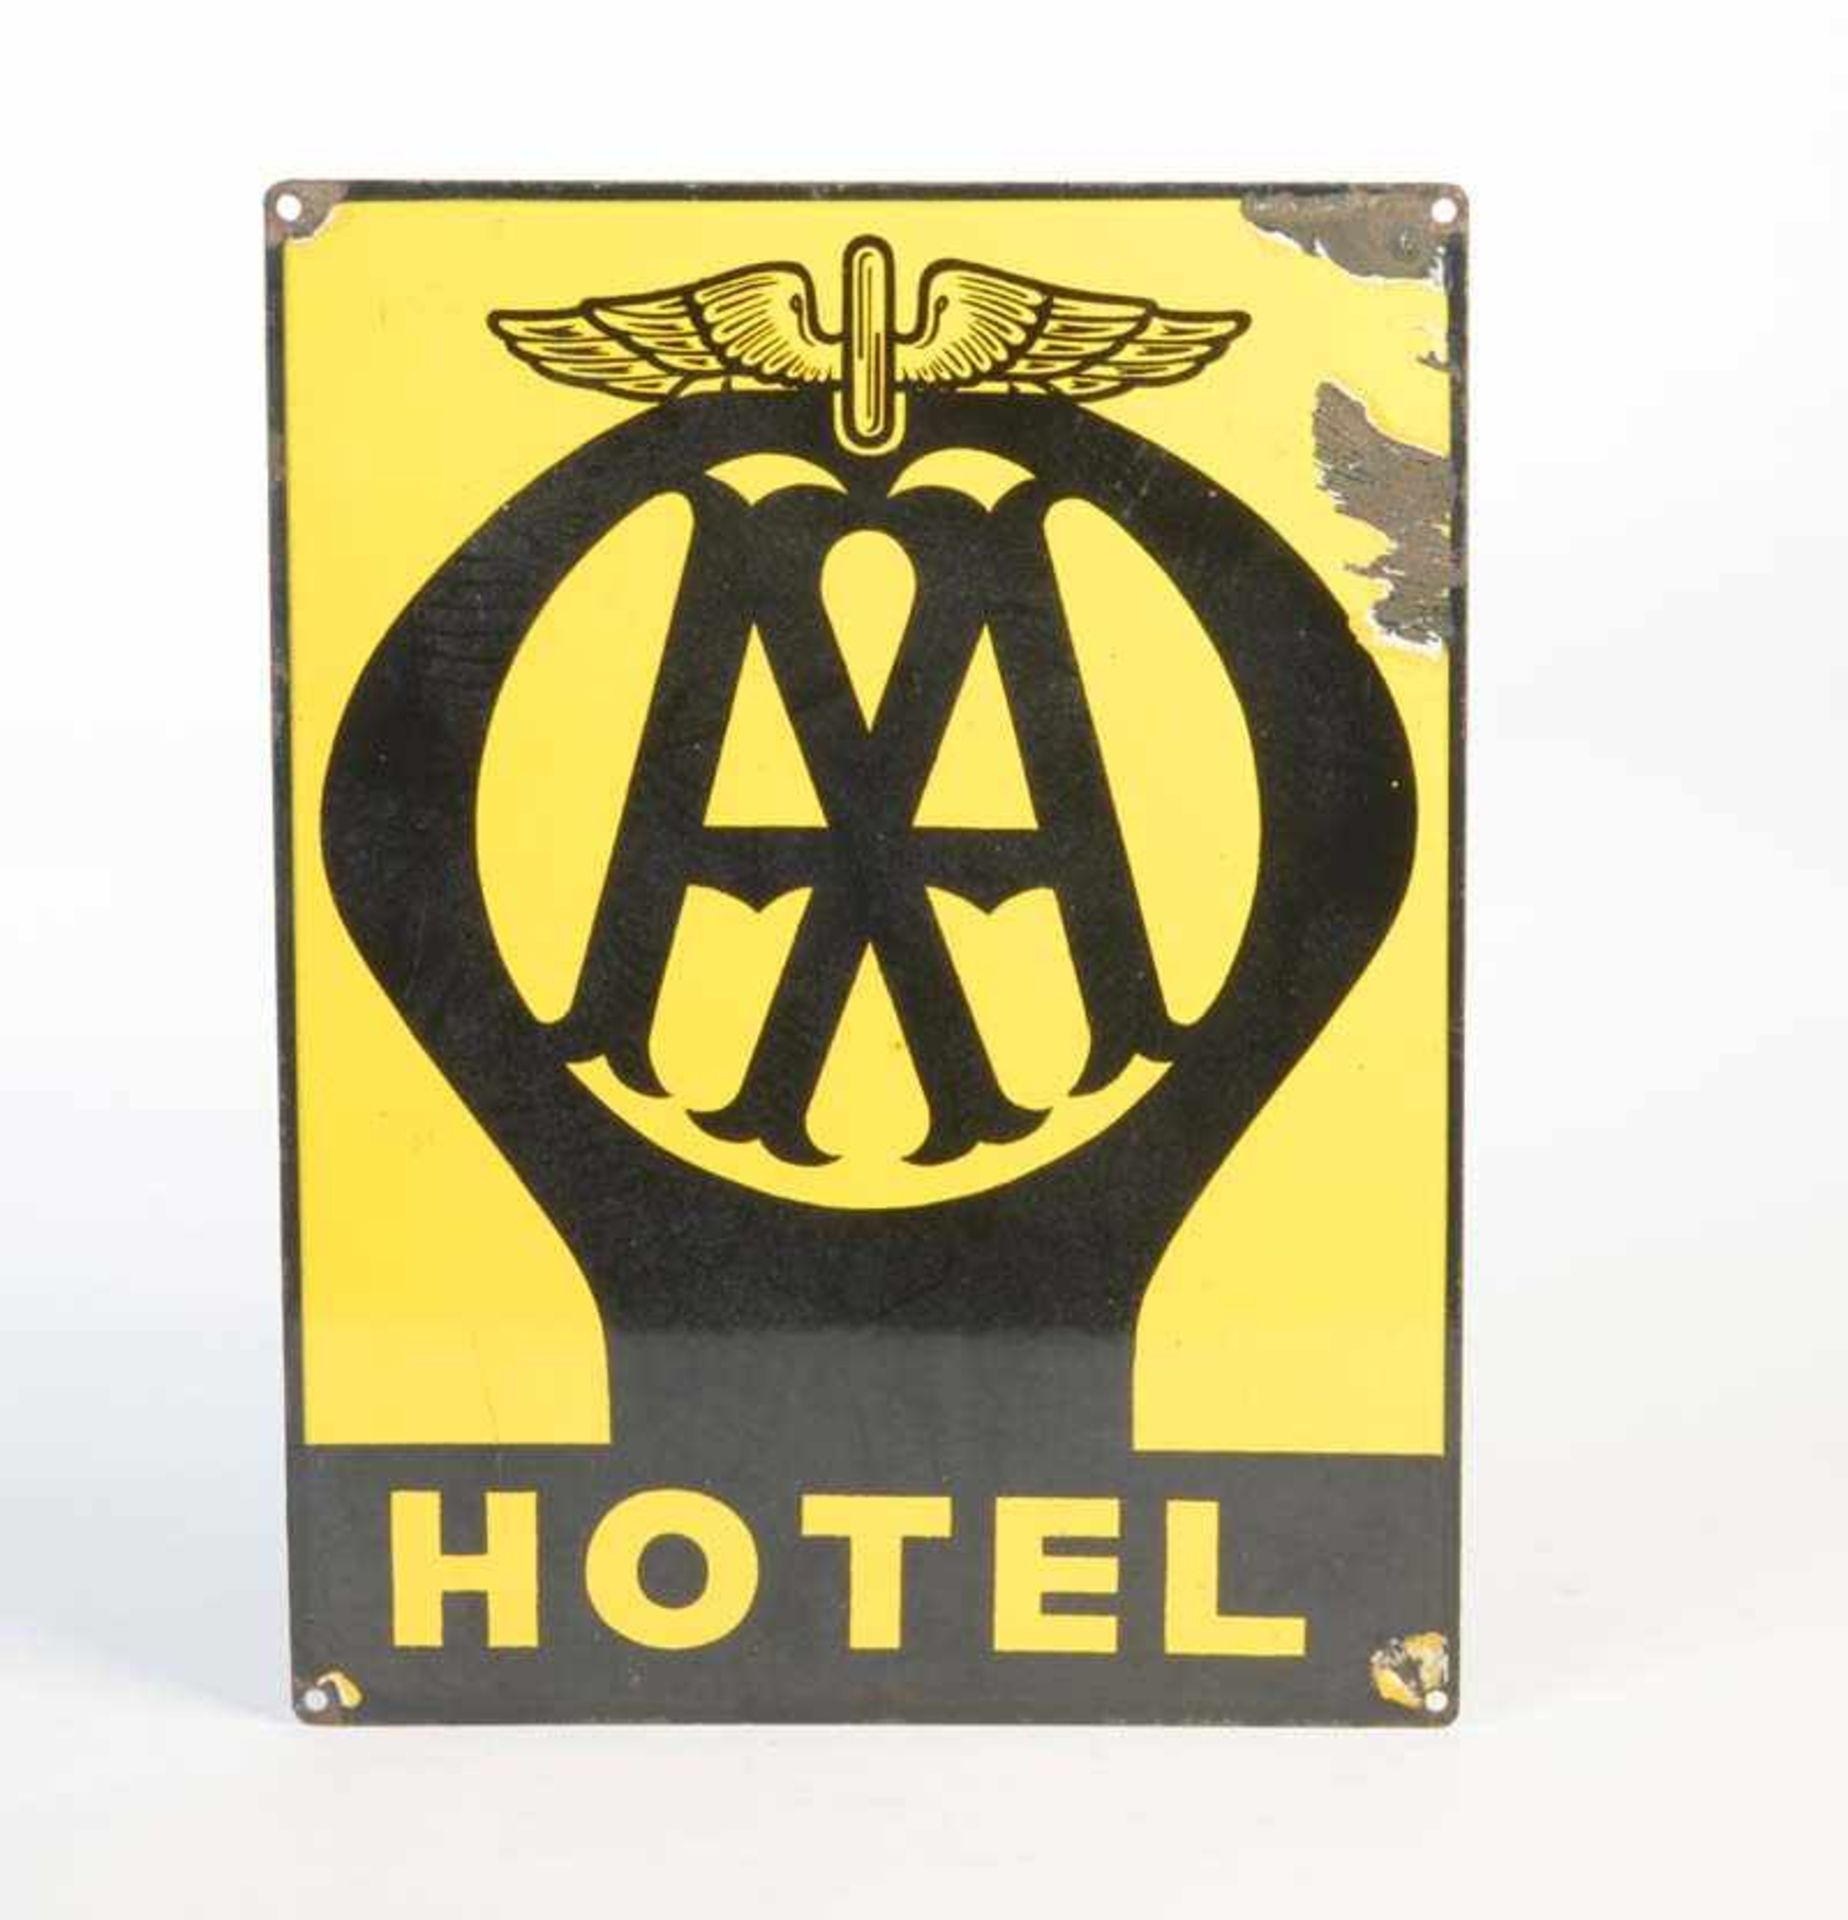 Emailleschild "AA Hotel", 30x40 cm, teilw. LM + Abplatzer rechts oben am Rand, Z 2Enamel Sign "AA